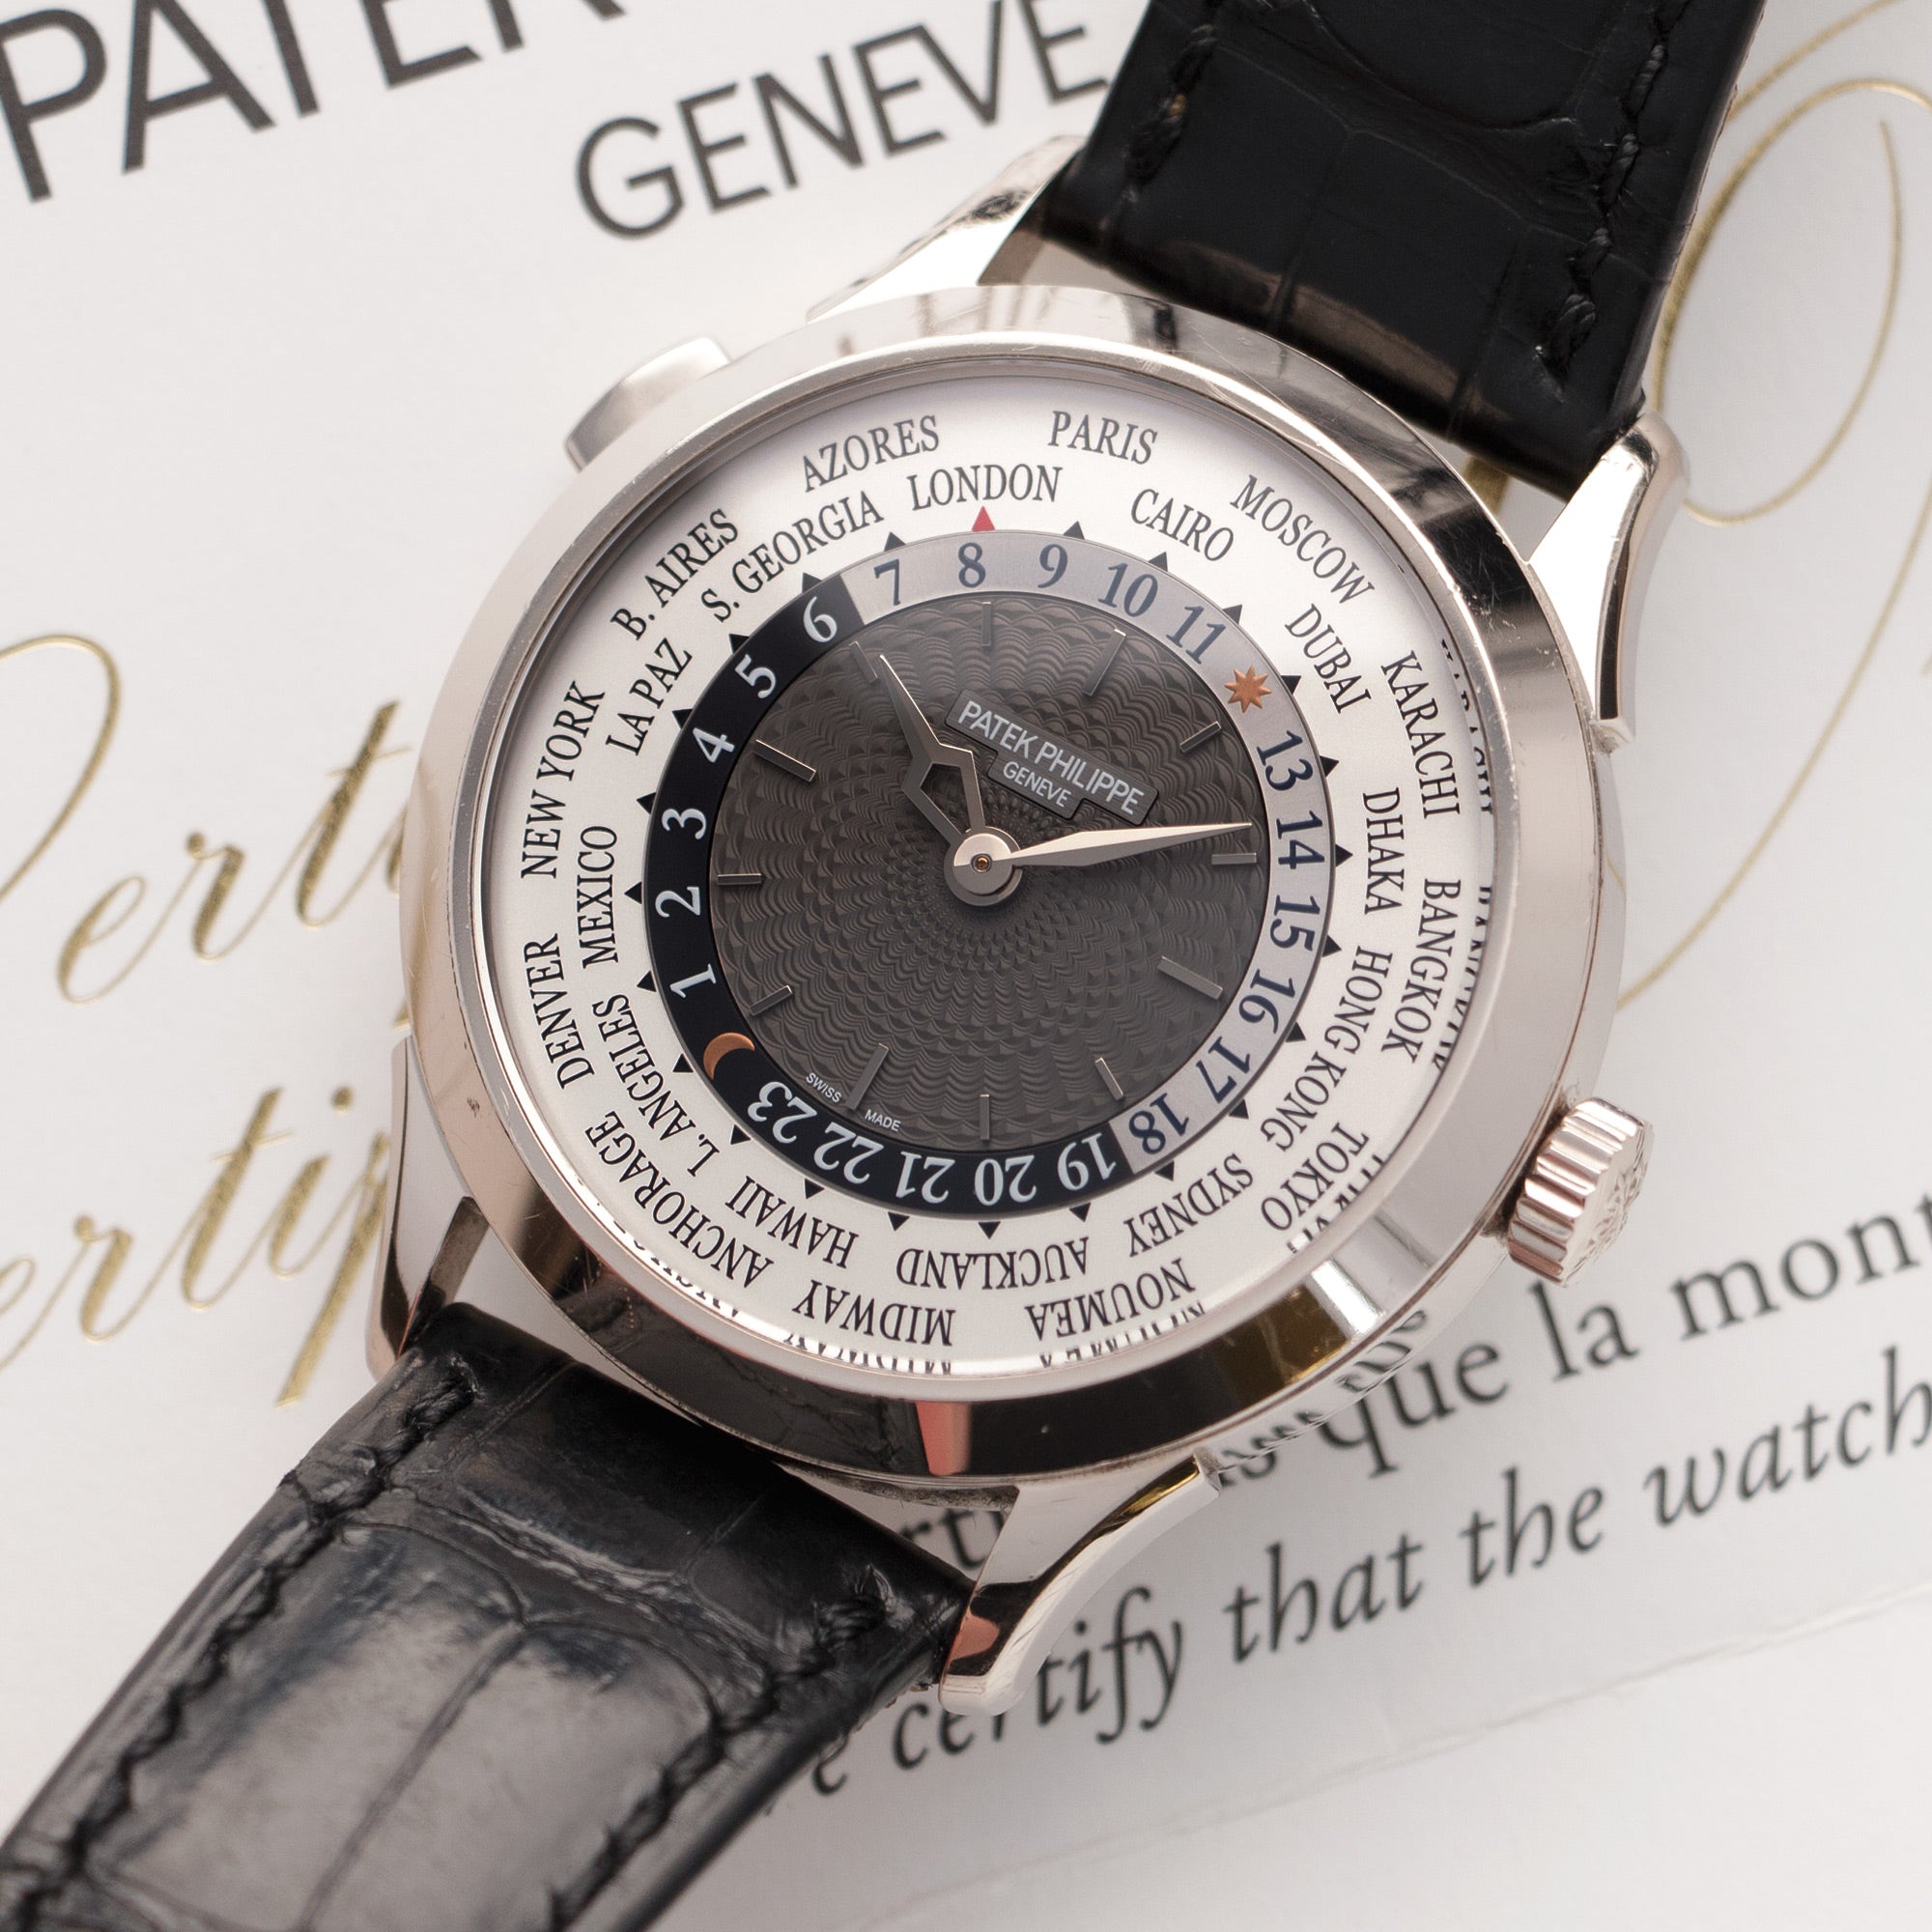 Patek Philippe - Patek Philippe White Gold World Time Watch Ref. 5230 - The Keystone Watches